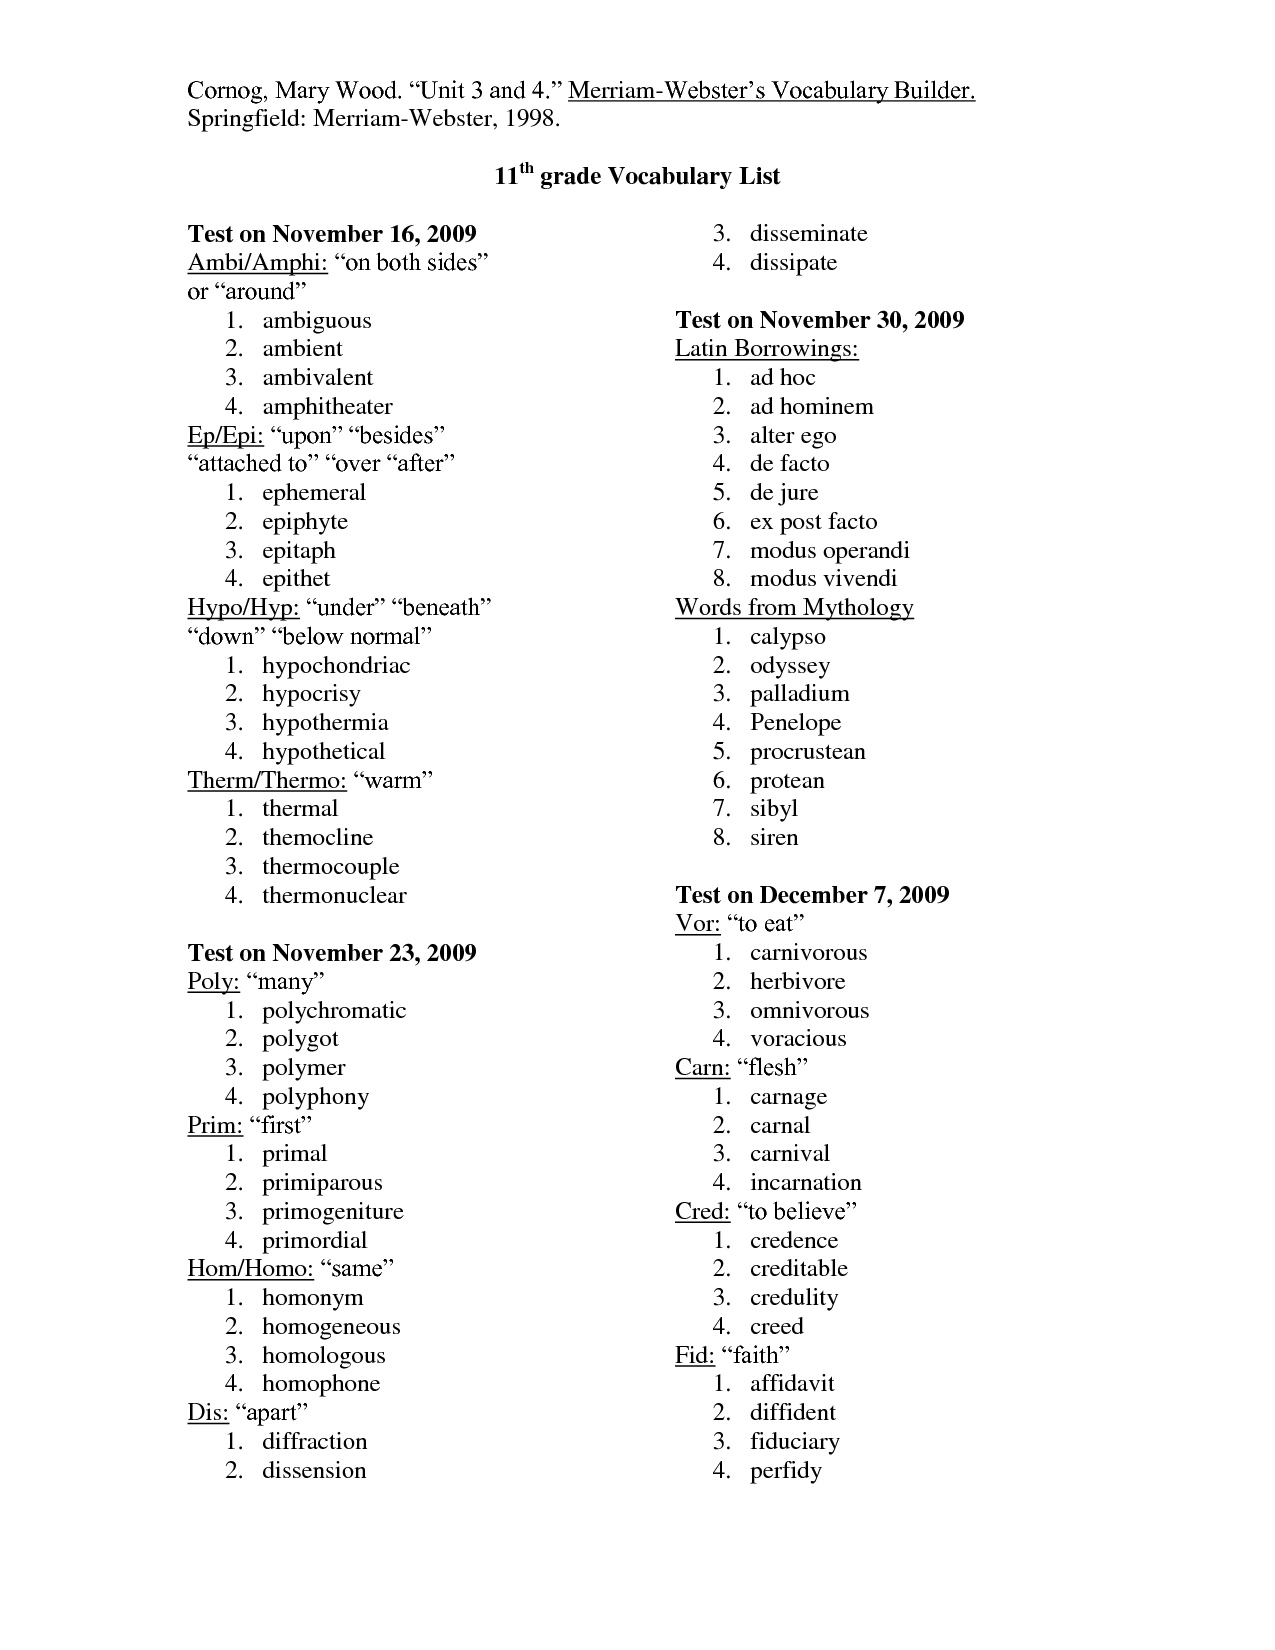 7th Grade Vocabulary Word Lists Image